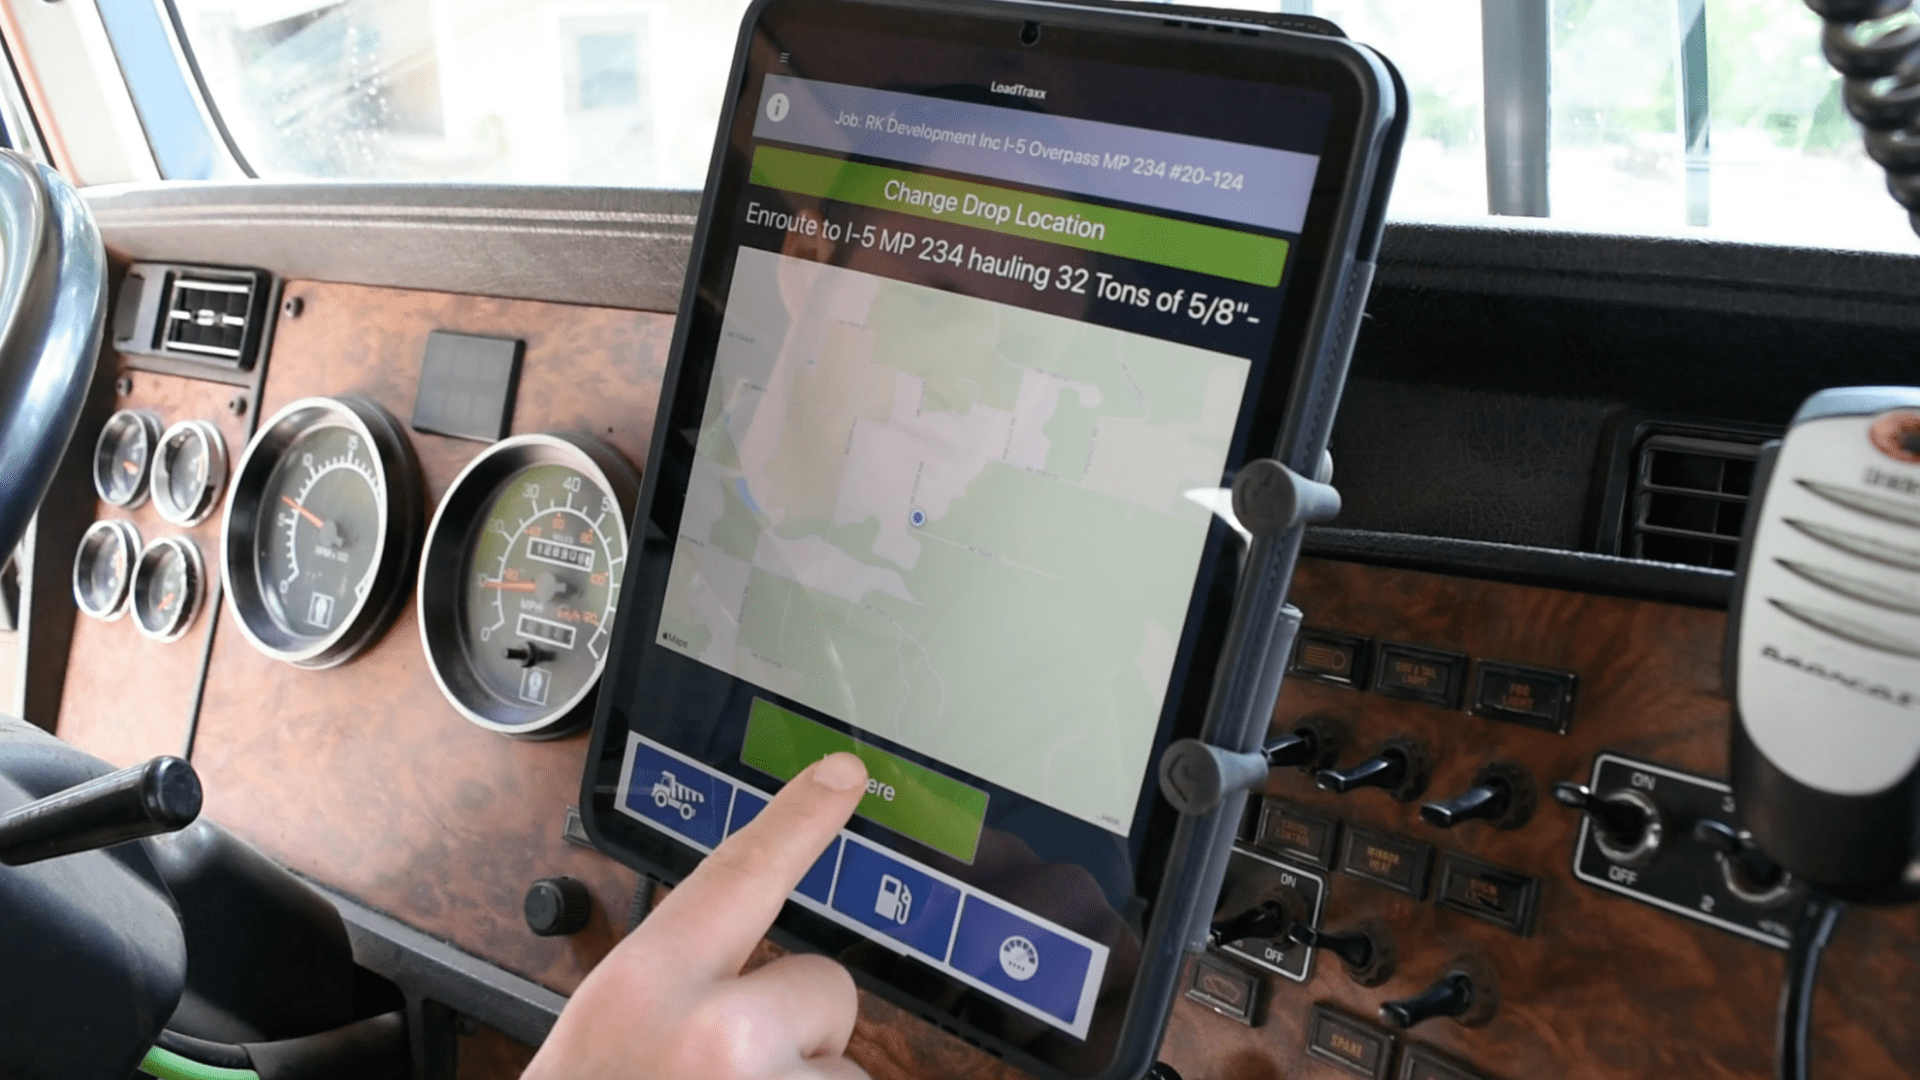 LoadTraxx Mobile App Features in Dump Truck Cab